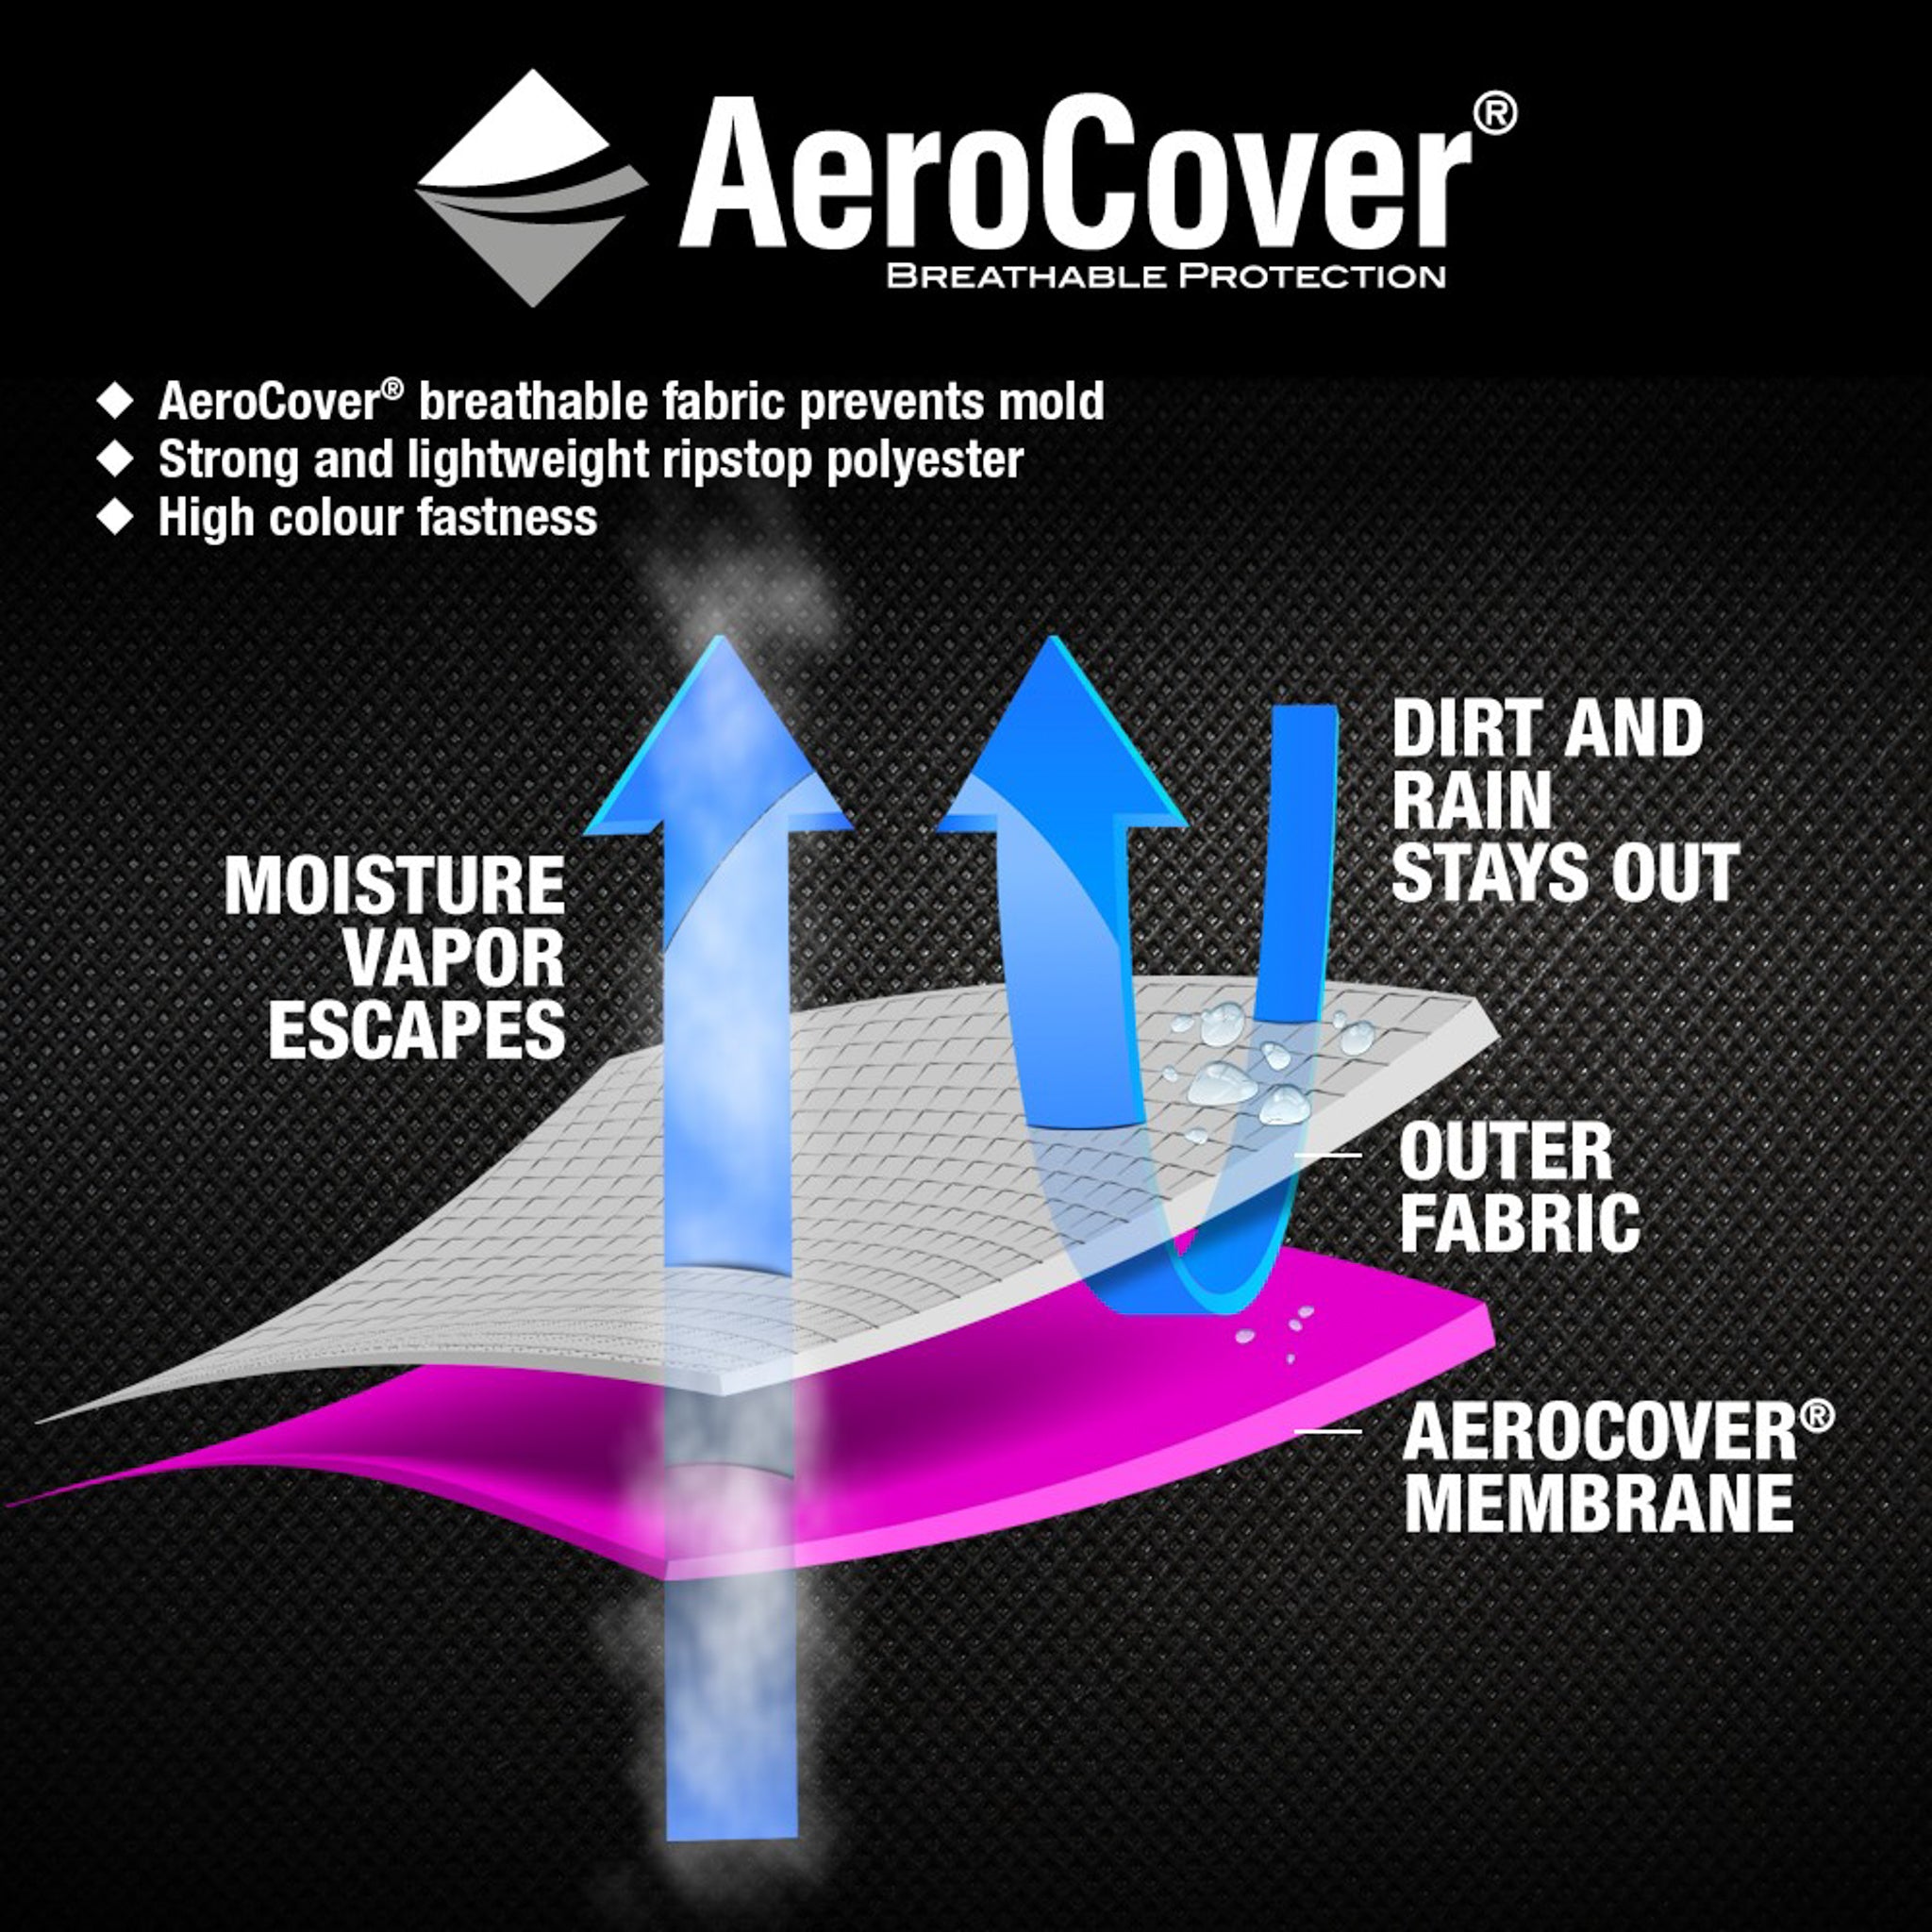 AeroCover - Trapeeze Lounge Set Cover 270 x 270 x 90 x 65/90cm